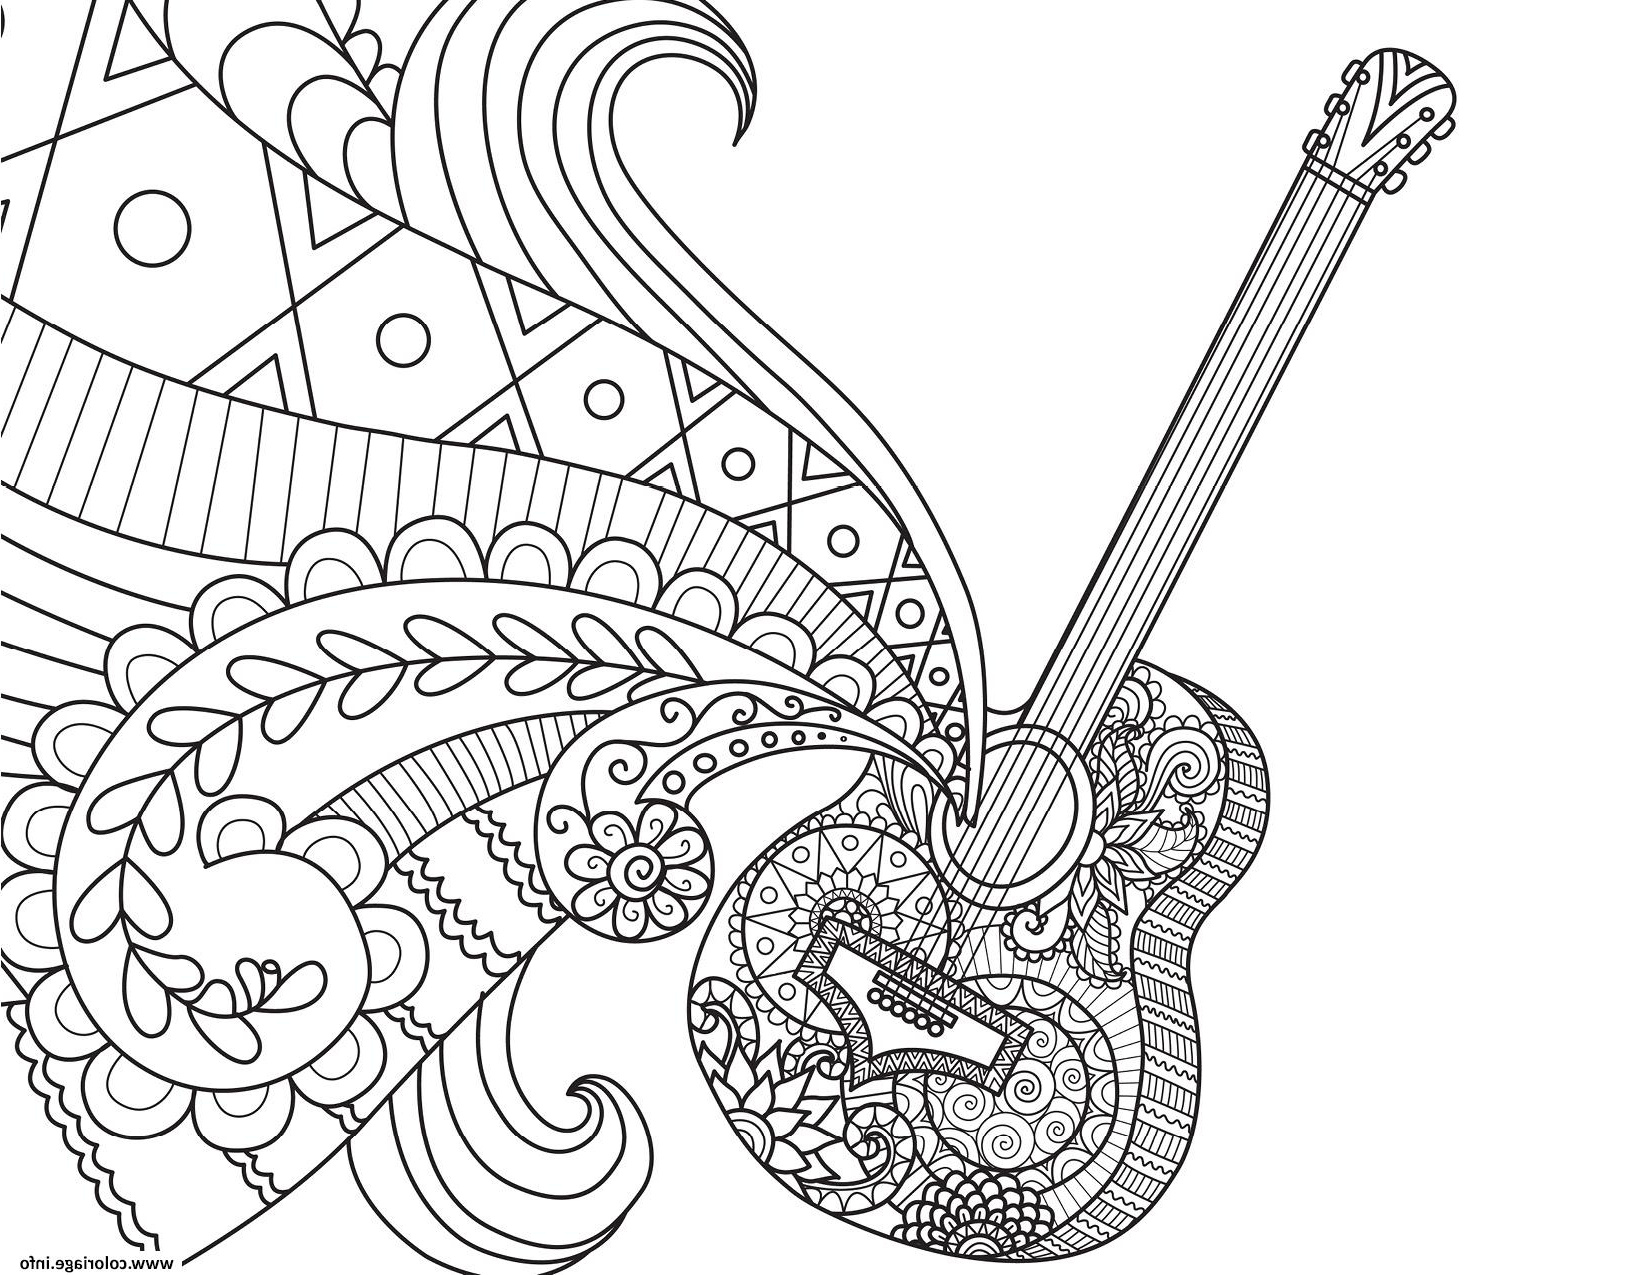 coco disney guitare de miguel par bimbimkha coloriage dessin